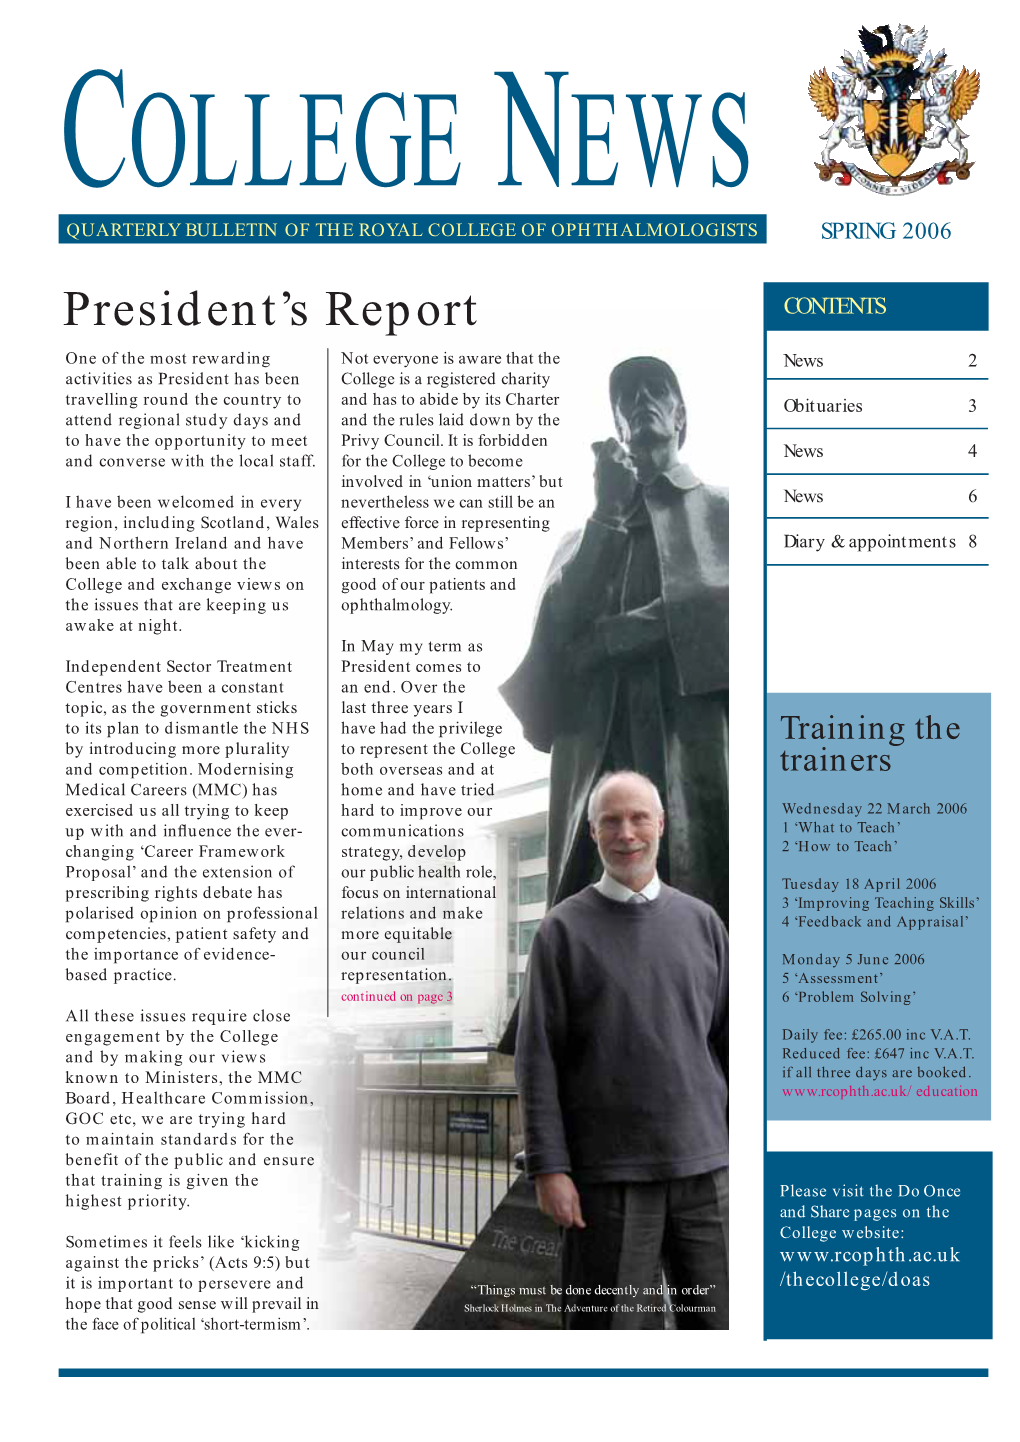 President's Report